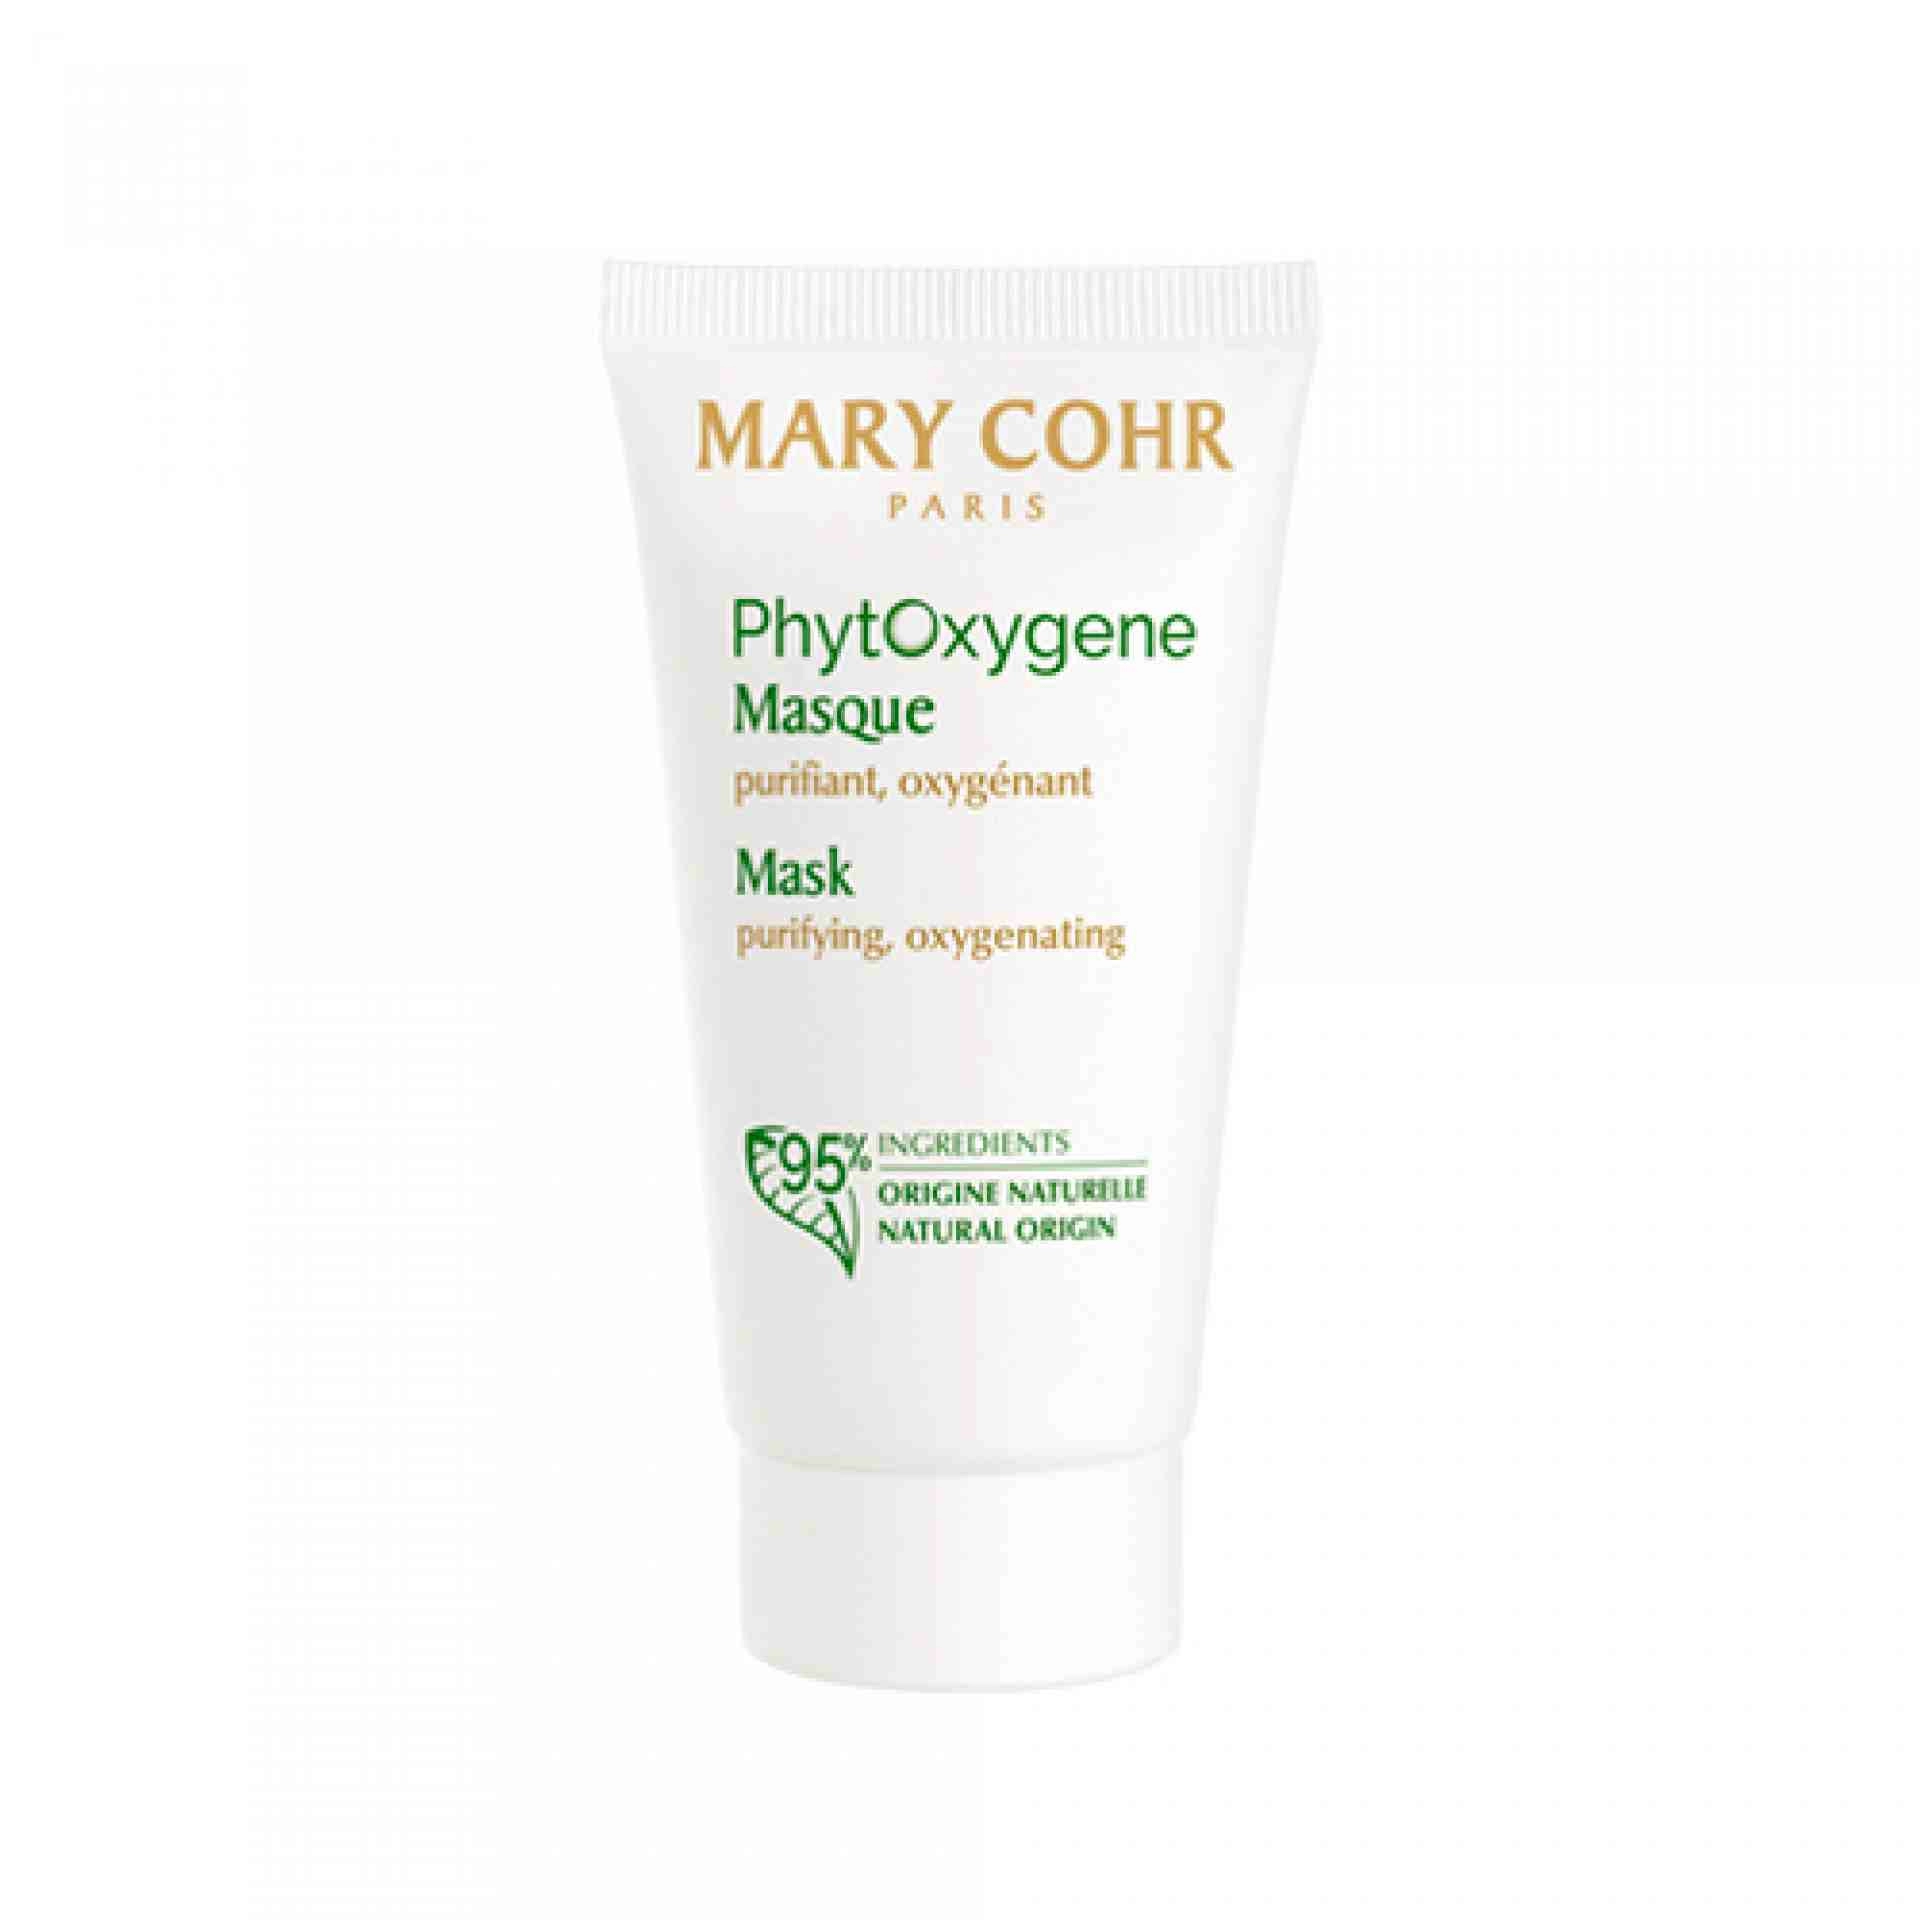 Phytoxygène Masque | Mascarilla Purificante 50ml - Mary Cohr ®